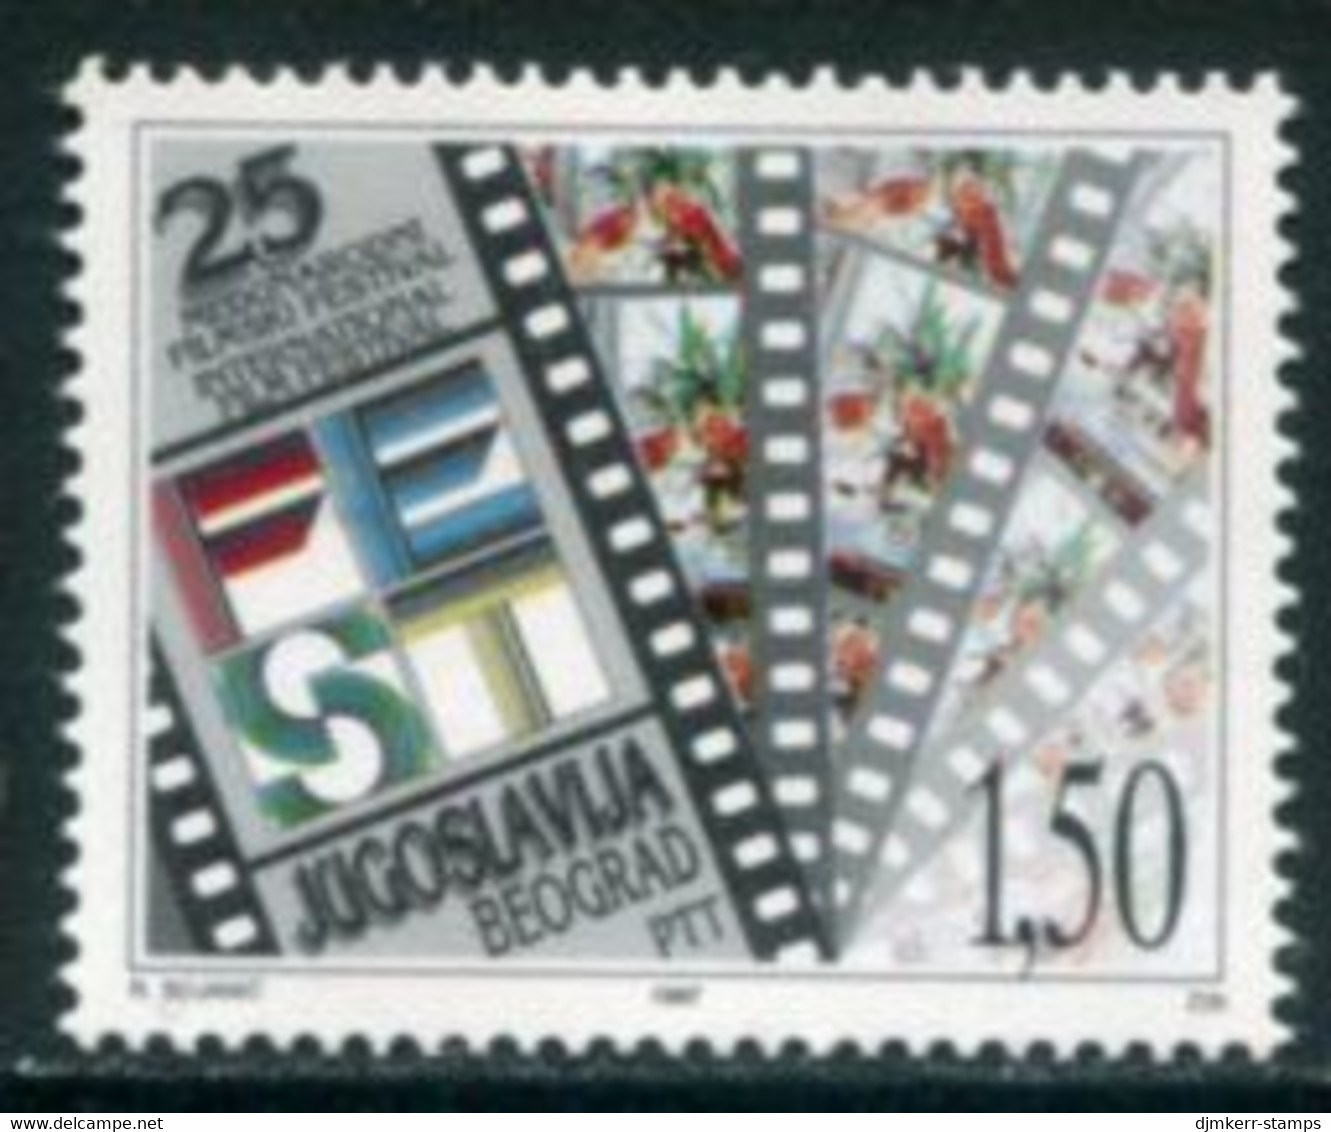 YUGOSLAVIA 1997 Film Festival MNH / **.  Michel 2808 - Nuevos